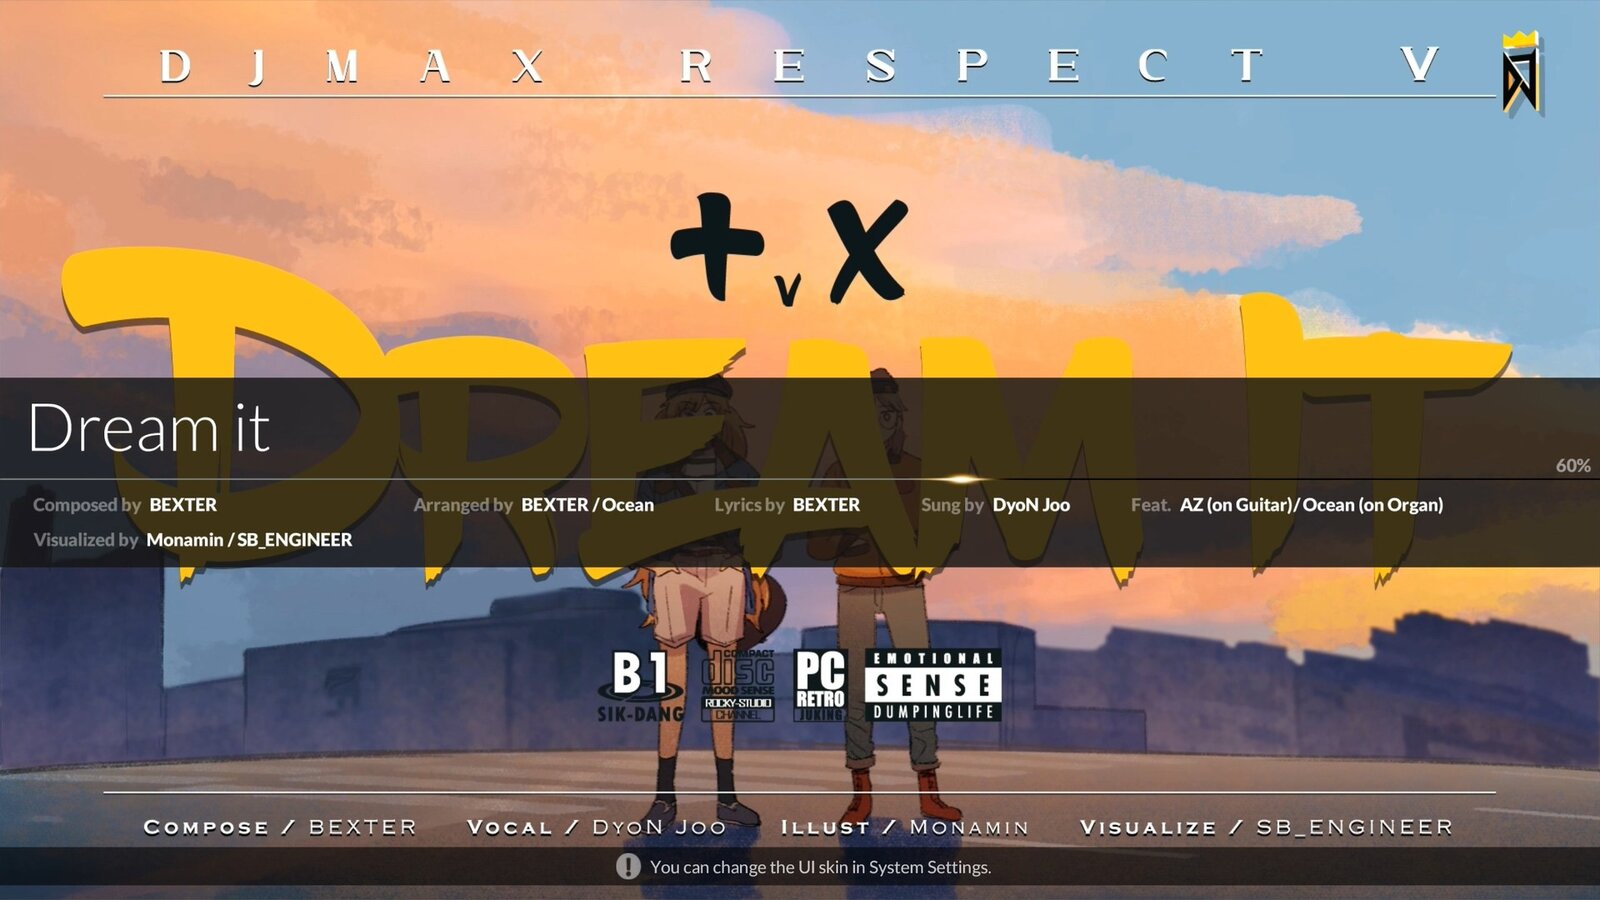 DJMAX RESPECT V - V EXTENSION III Original Soundtrack